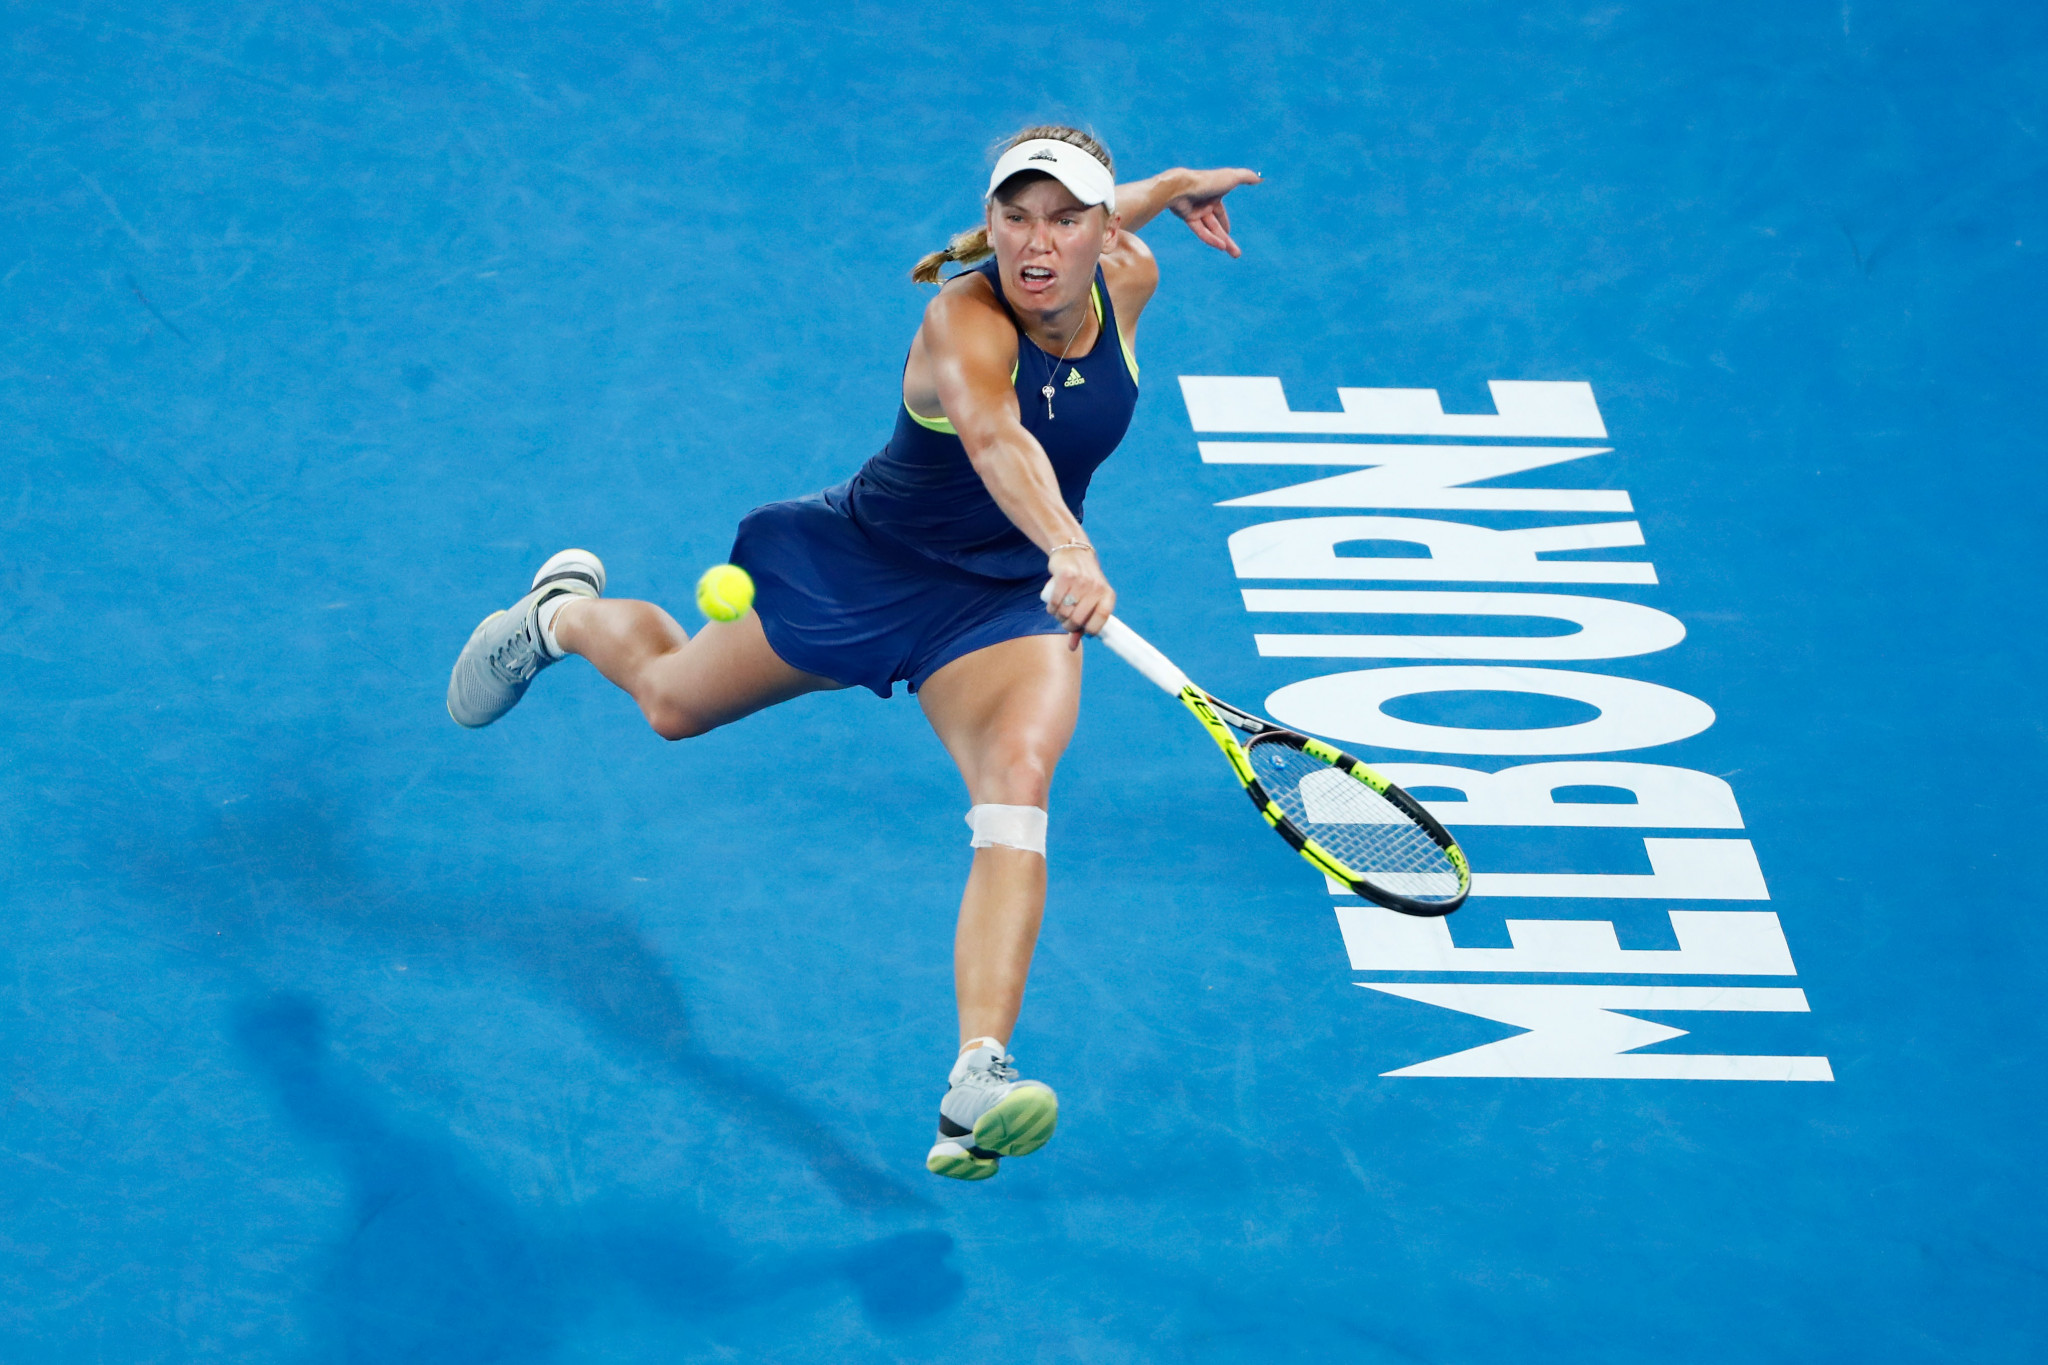 Caroline Wozniacki and Simona Halep were both bidding for their first Grand Slam crown